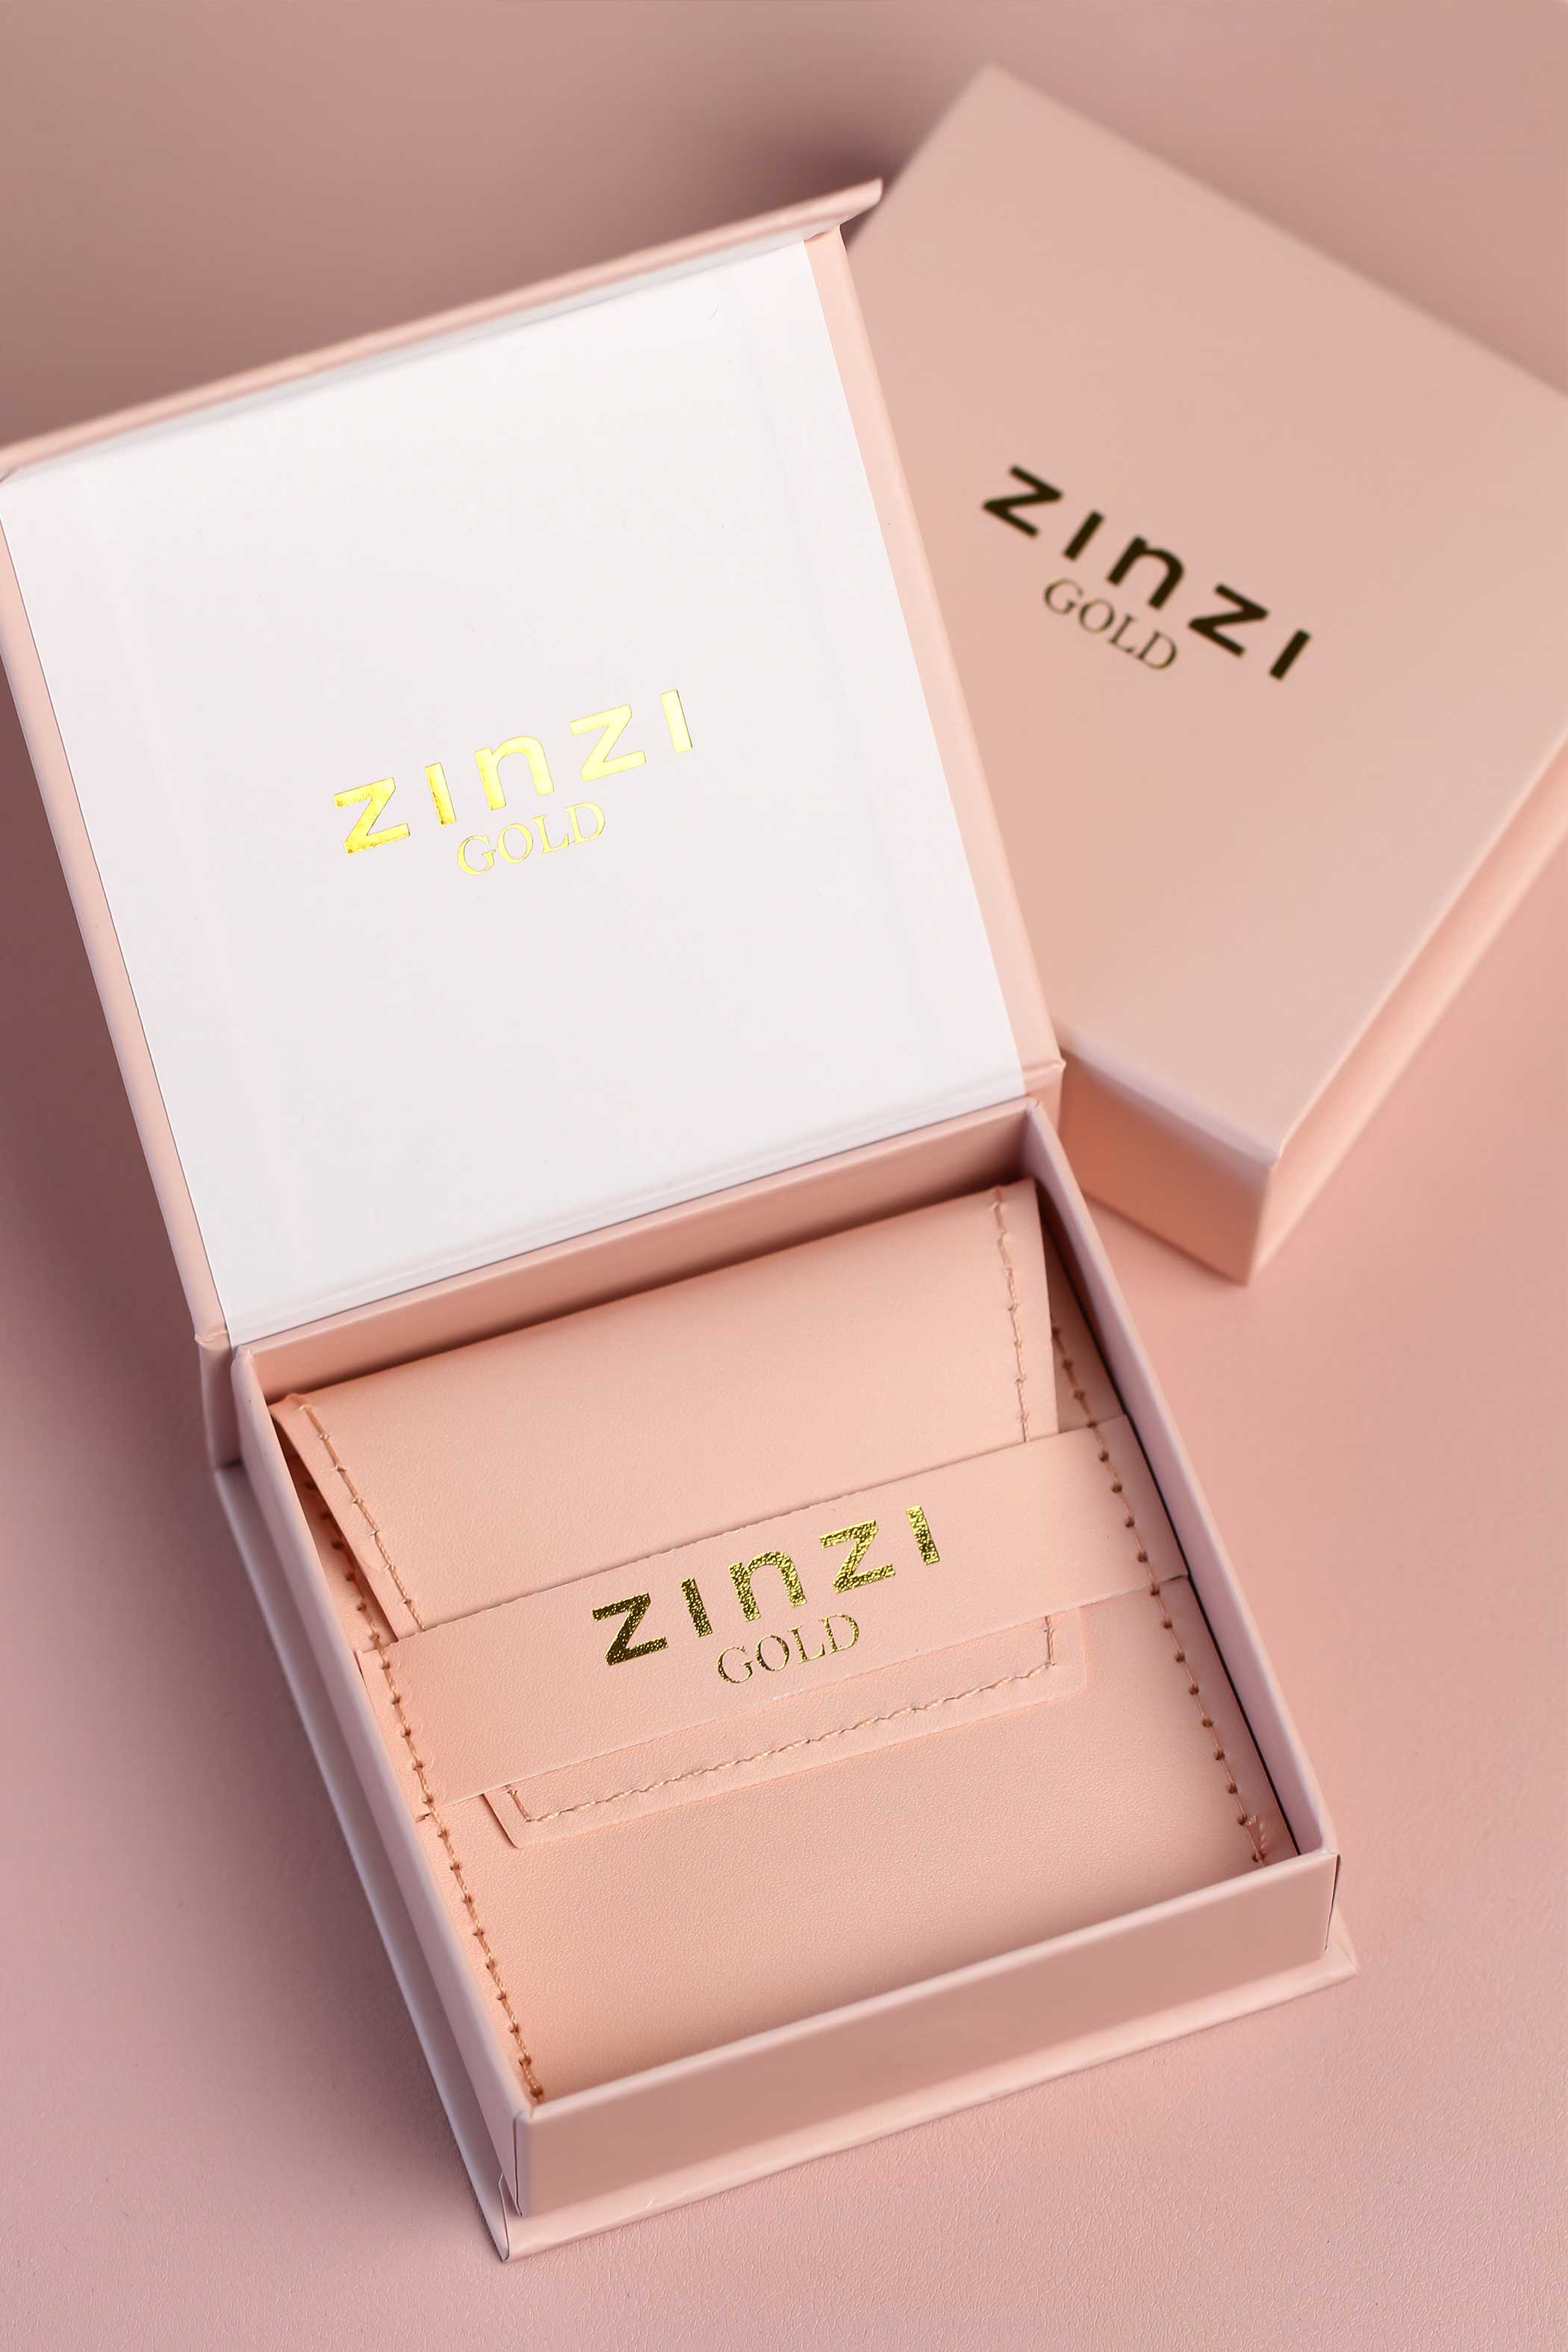 ZINZI 14K Gold Earrings Pendants Prong Setting White Zirconia 6mm ZGCH423 (excl. hoop earrings)